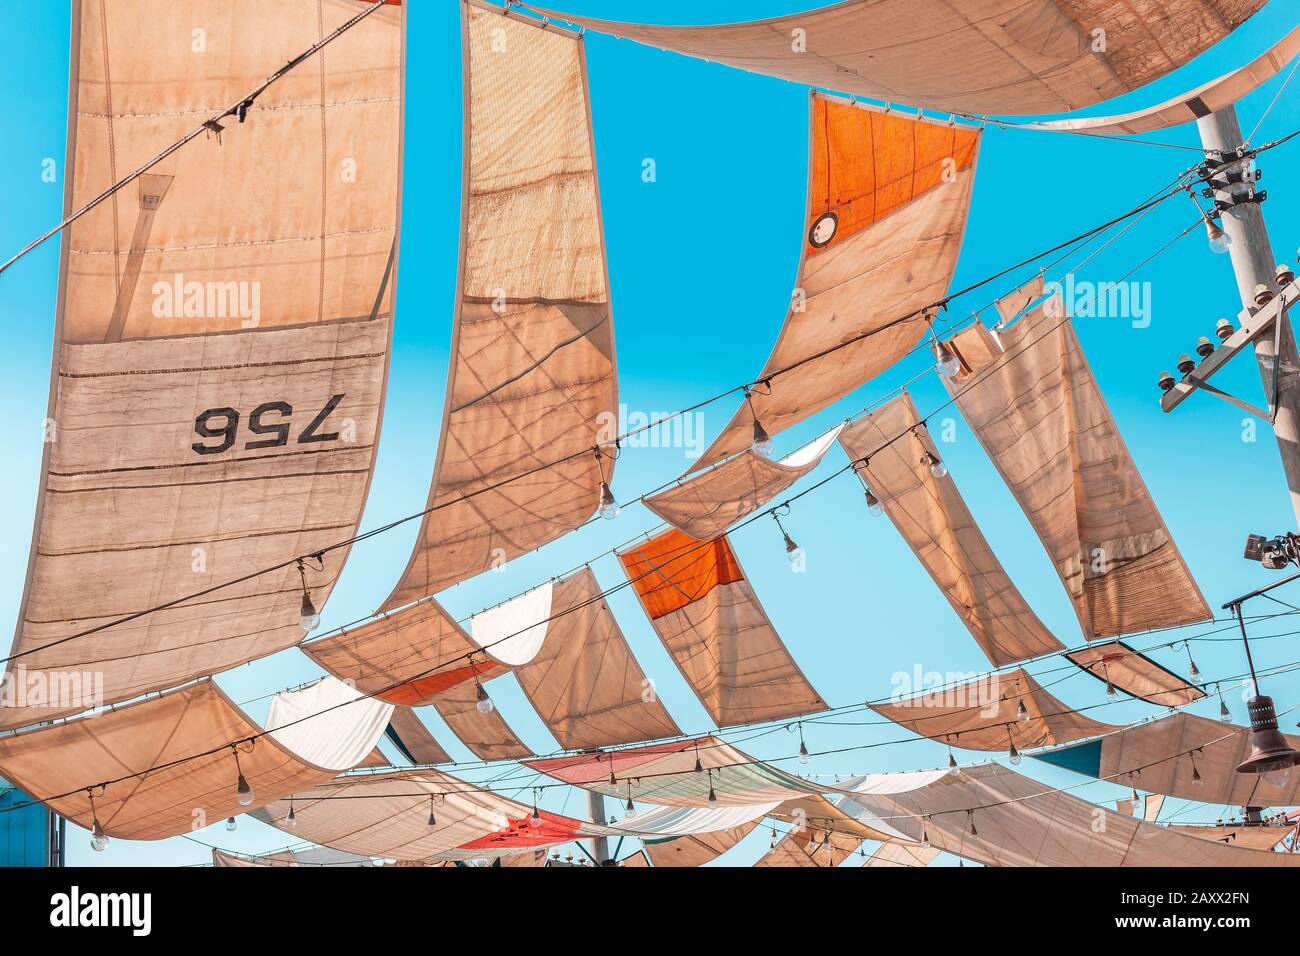 Alte Segeltuch-Leinwand flattern gegen den blauen Himmel Stockfotografie -  Alamy